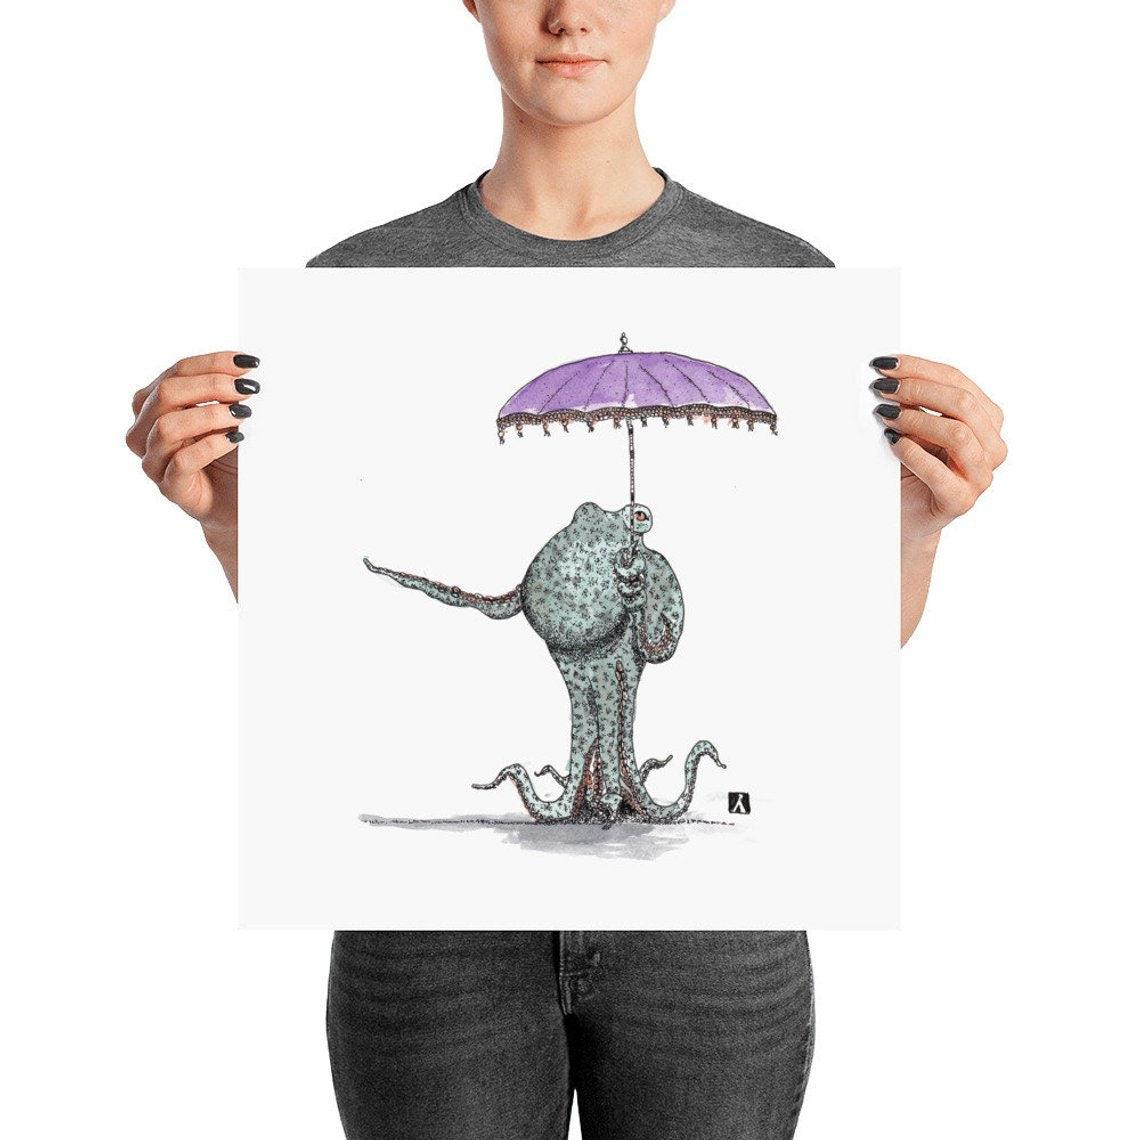 BellavanceInk: Pen & Ink Drawing of Octopus Holding a Umbrella Parasol - BellavanceInk